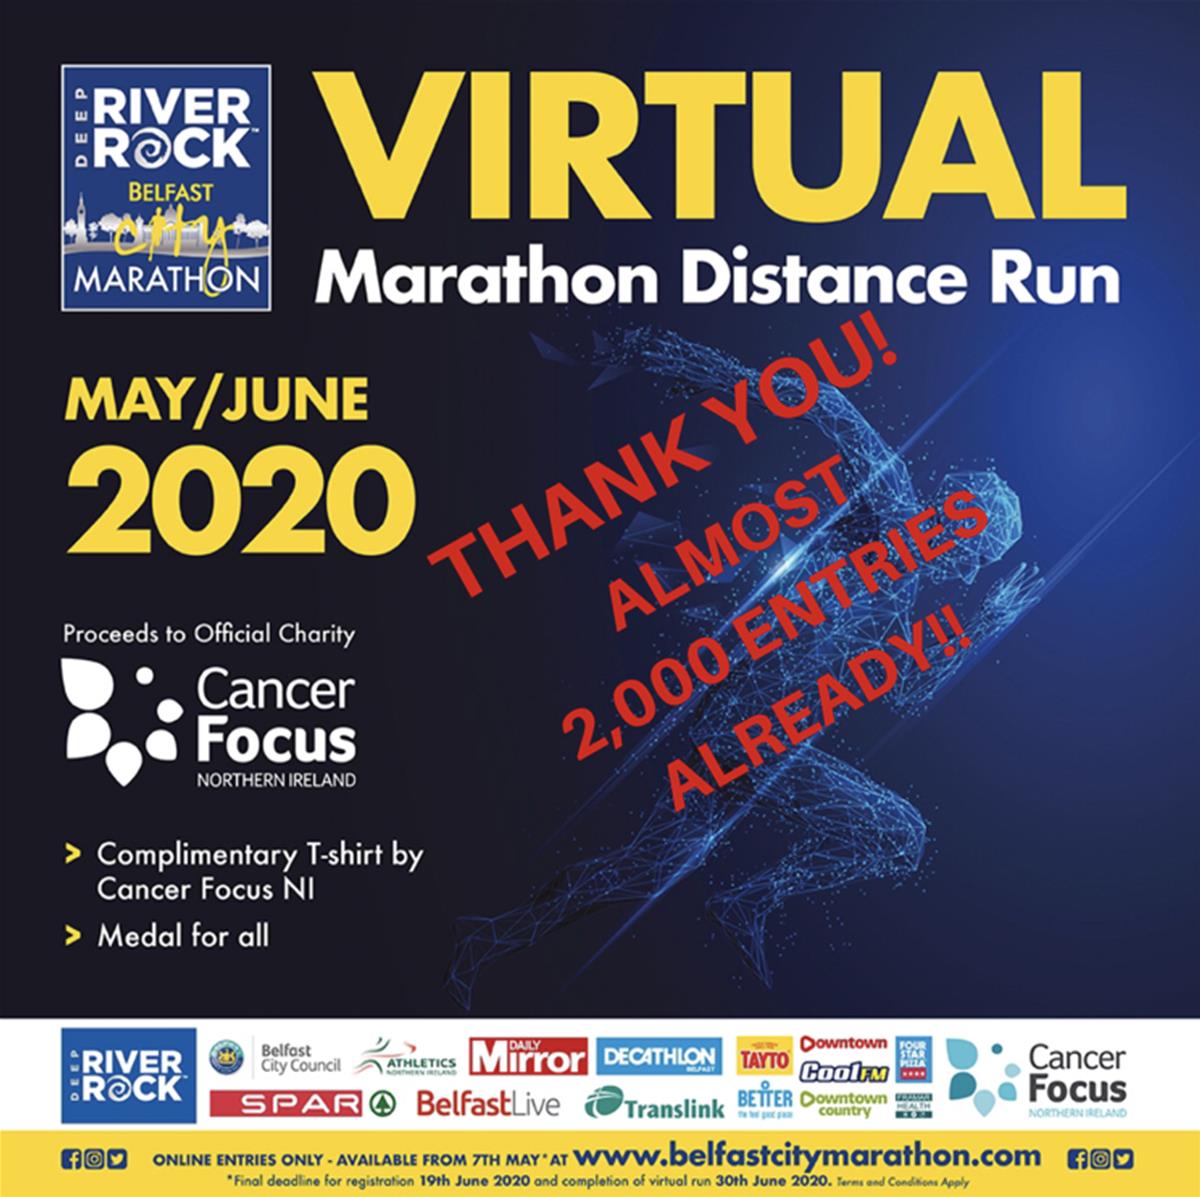 Virtual Marathon Distance Run Entries Flying In